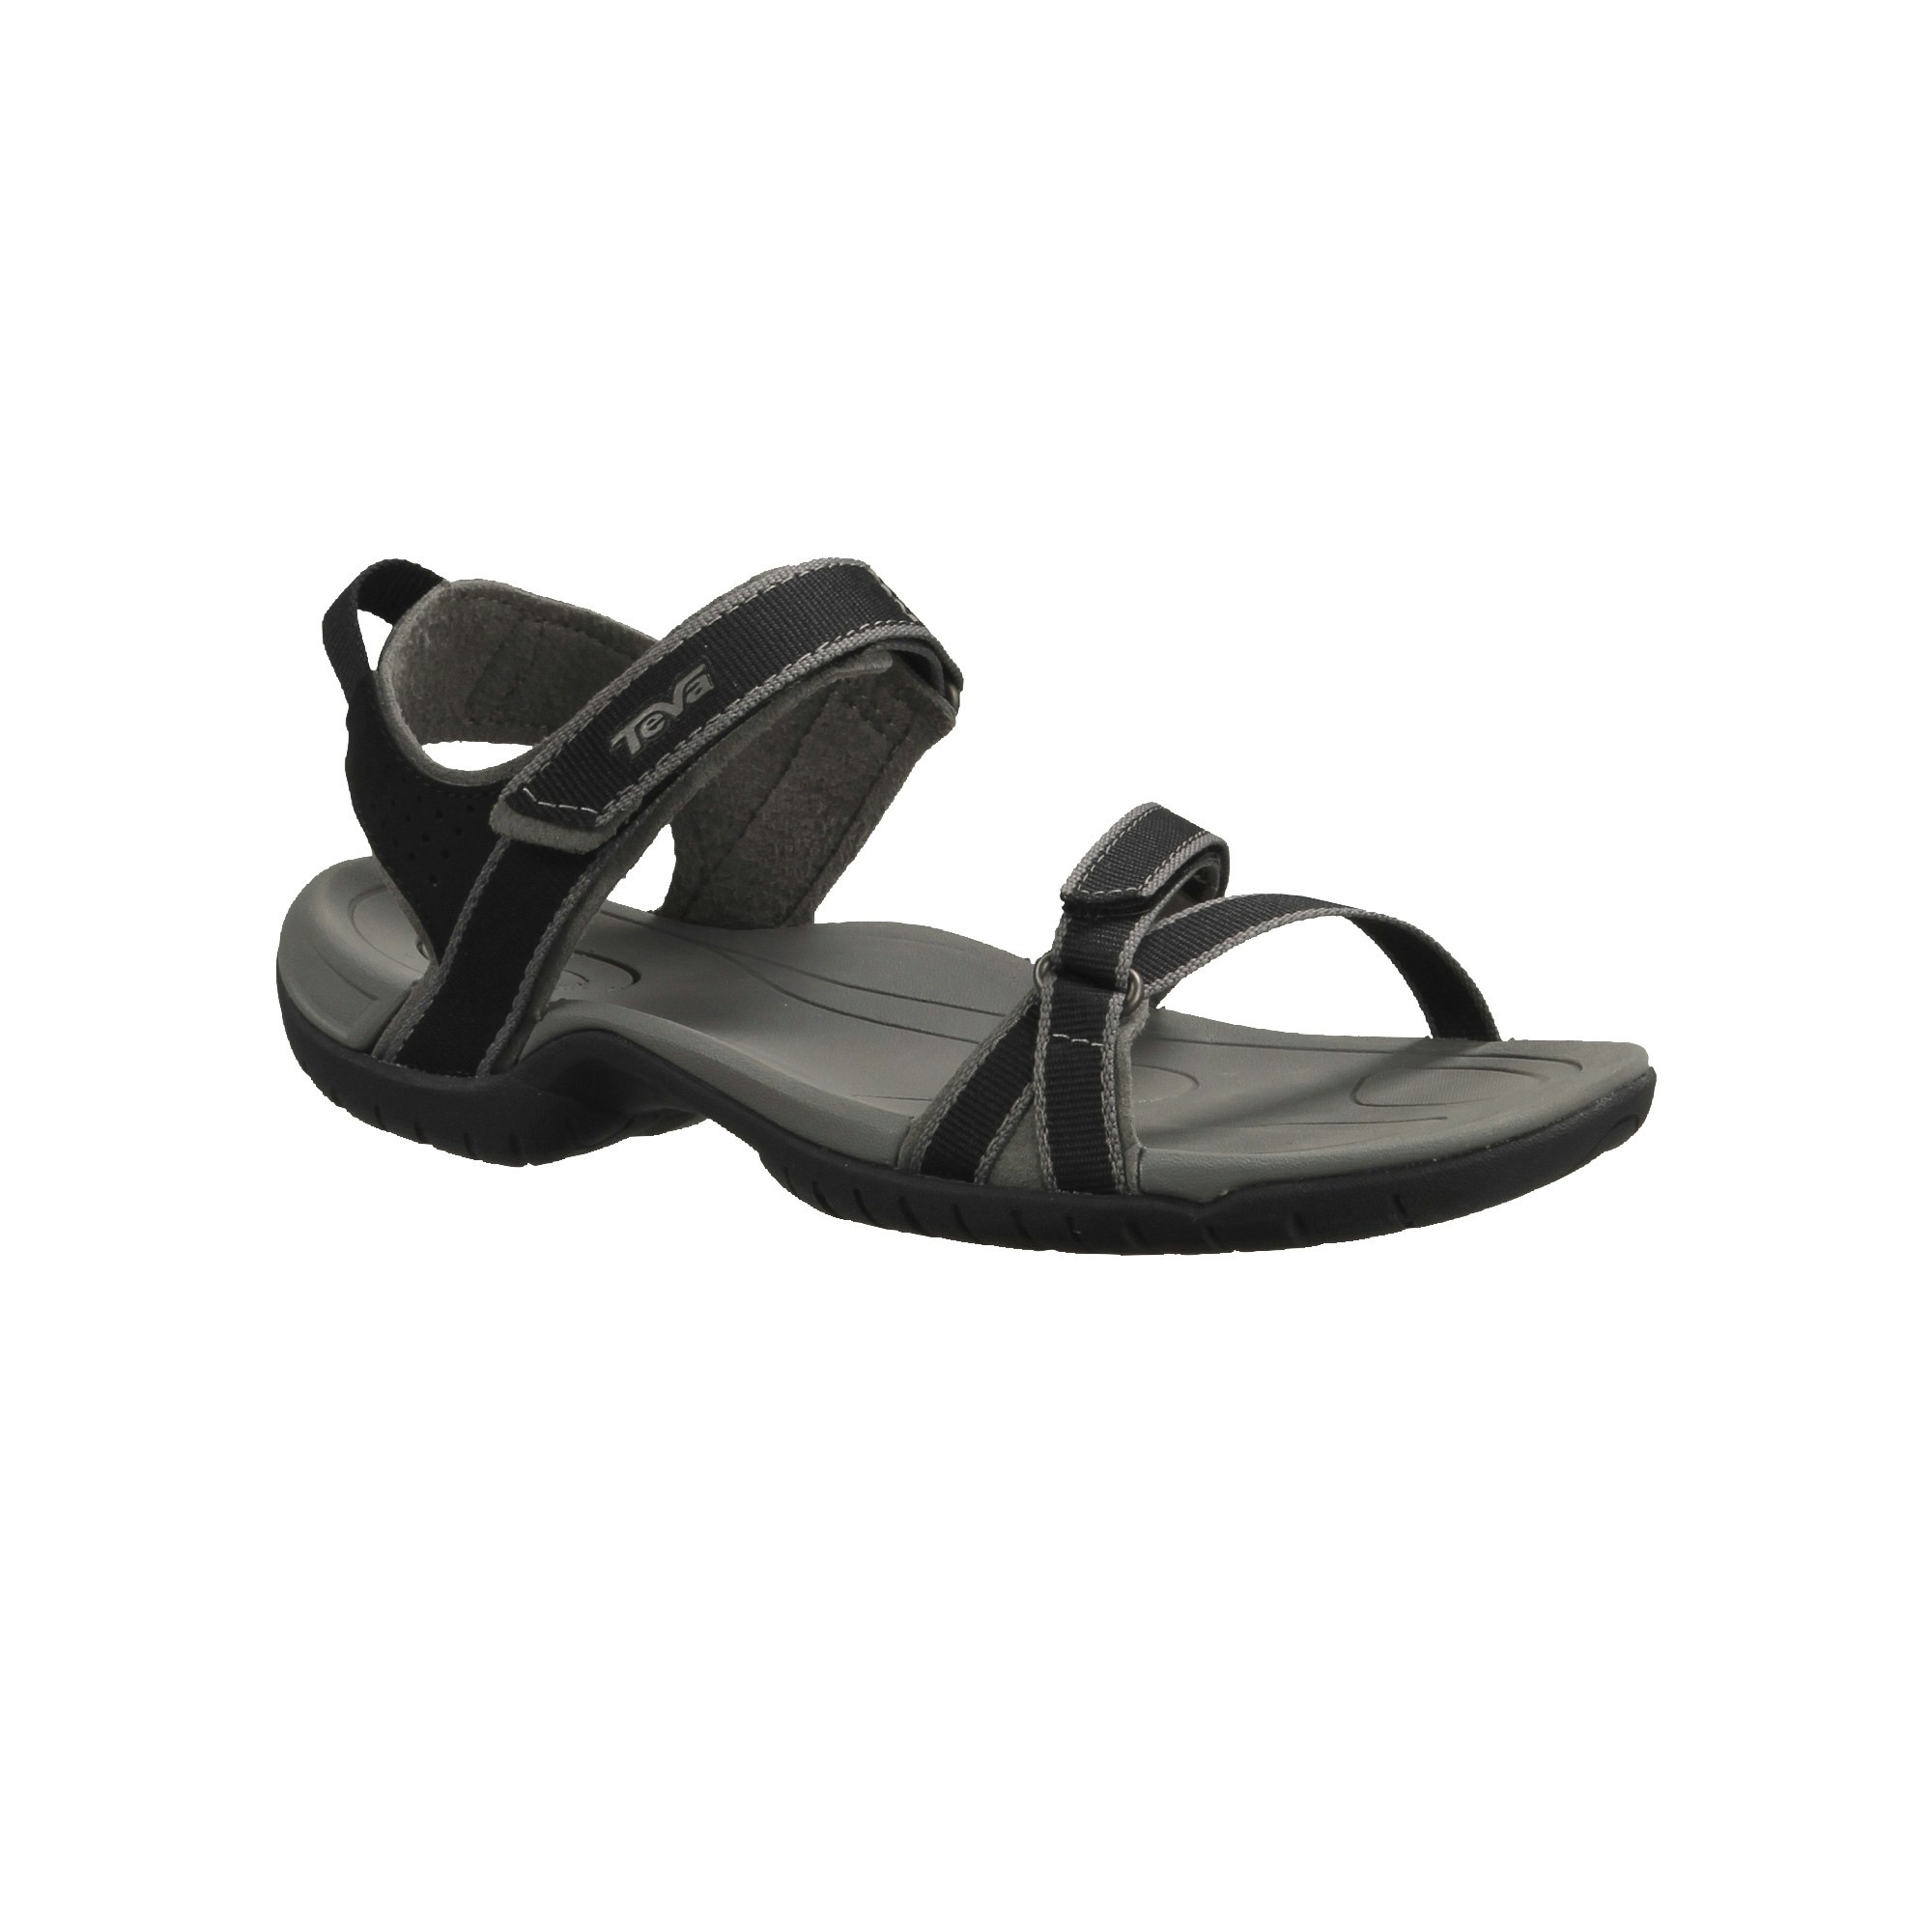 Teva Verra Women's Sandals - Black